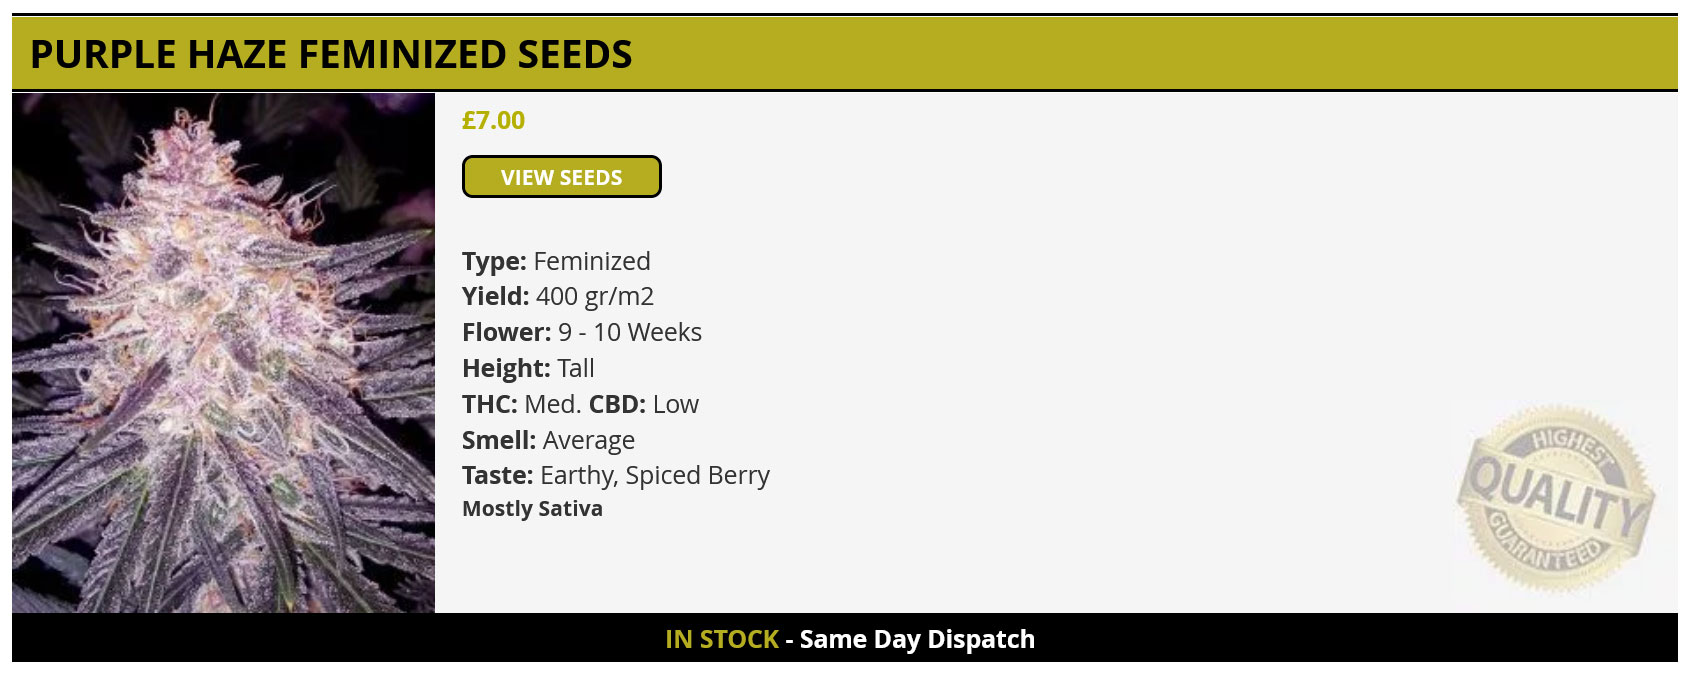 Cannabis seeds ebay uk